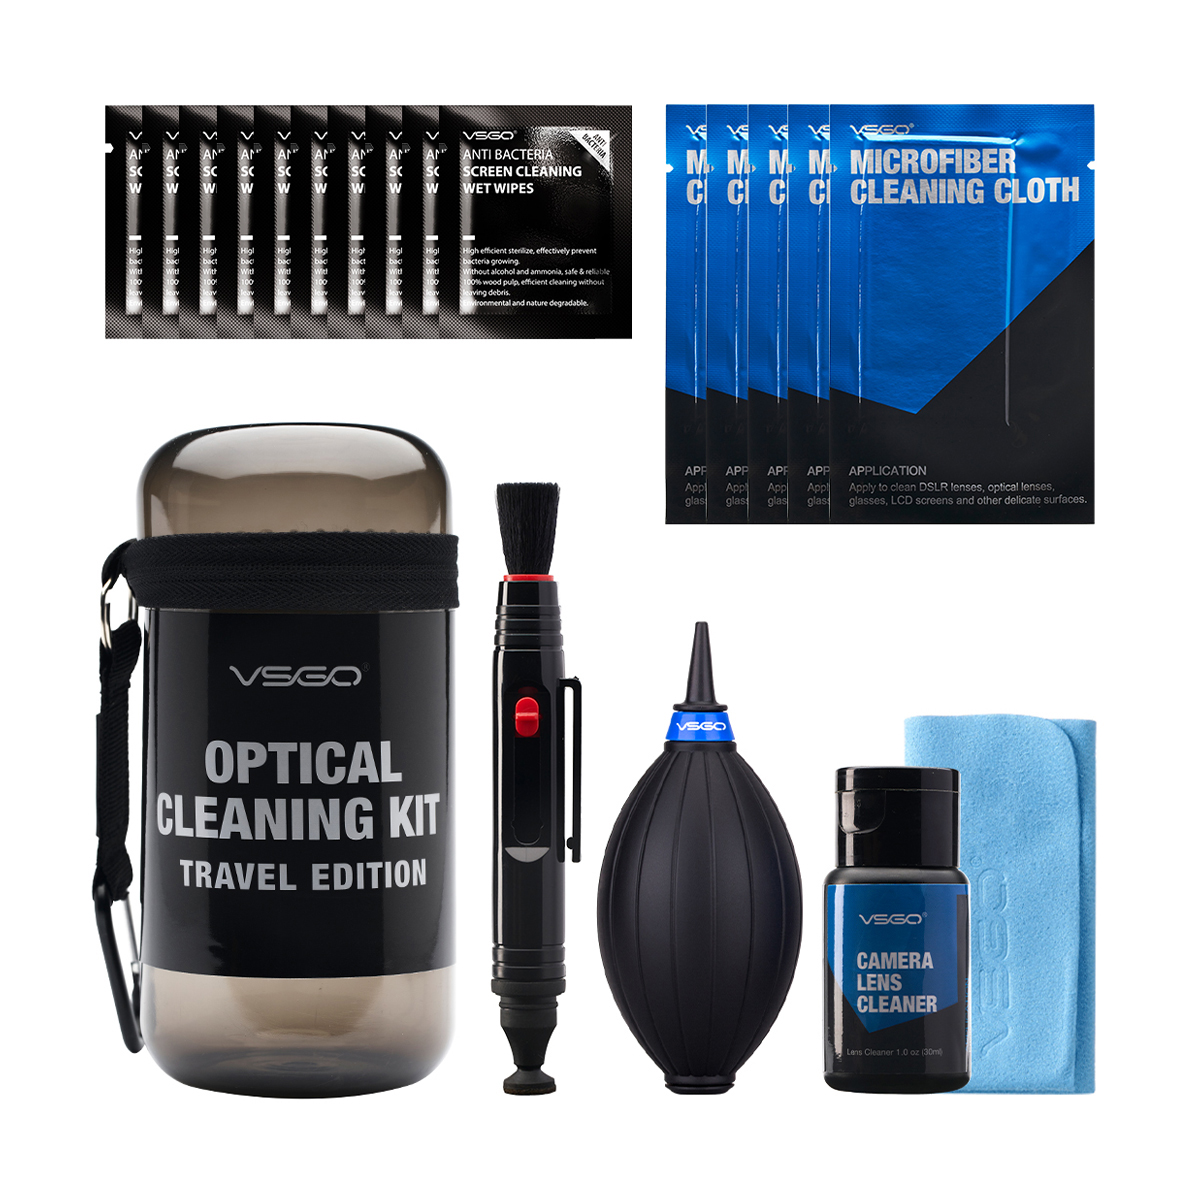 VSGO 4008 Optical Cleaning Kit Travel Edition - Grey